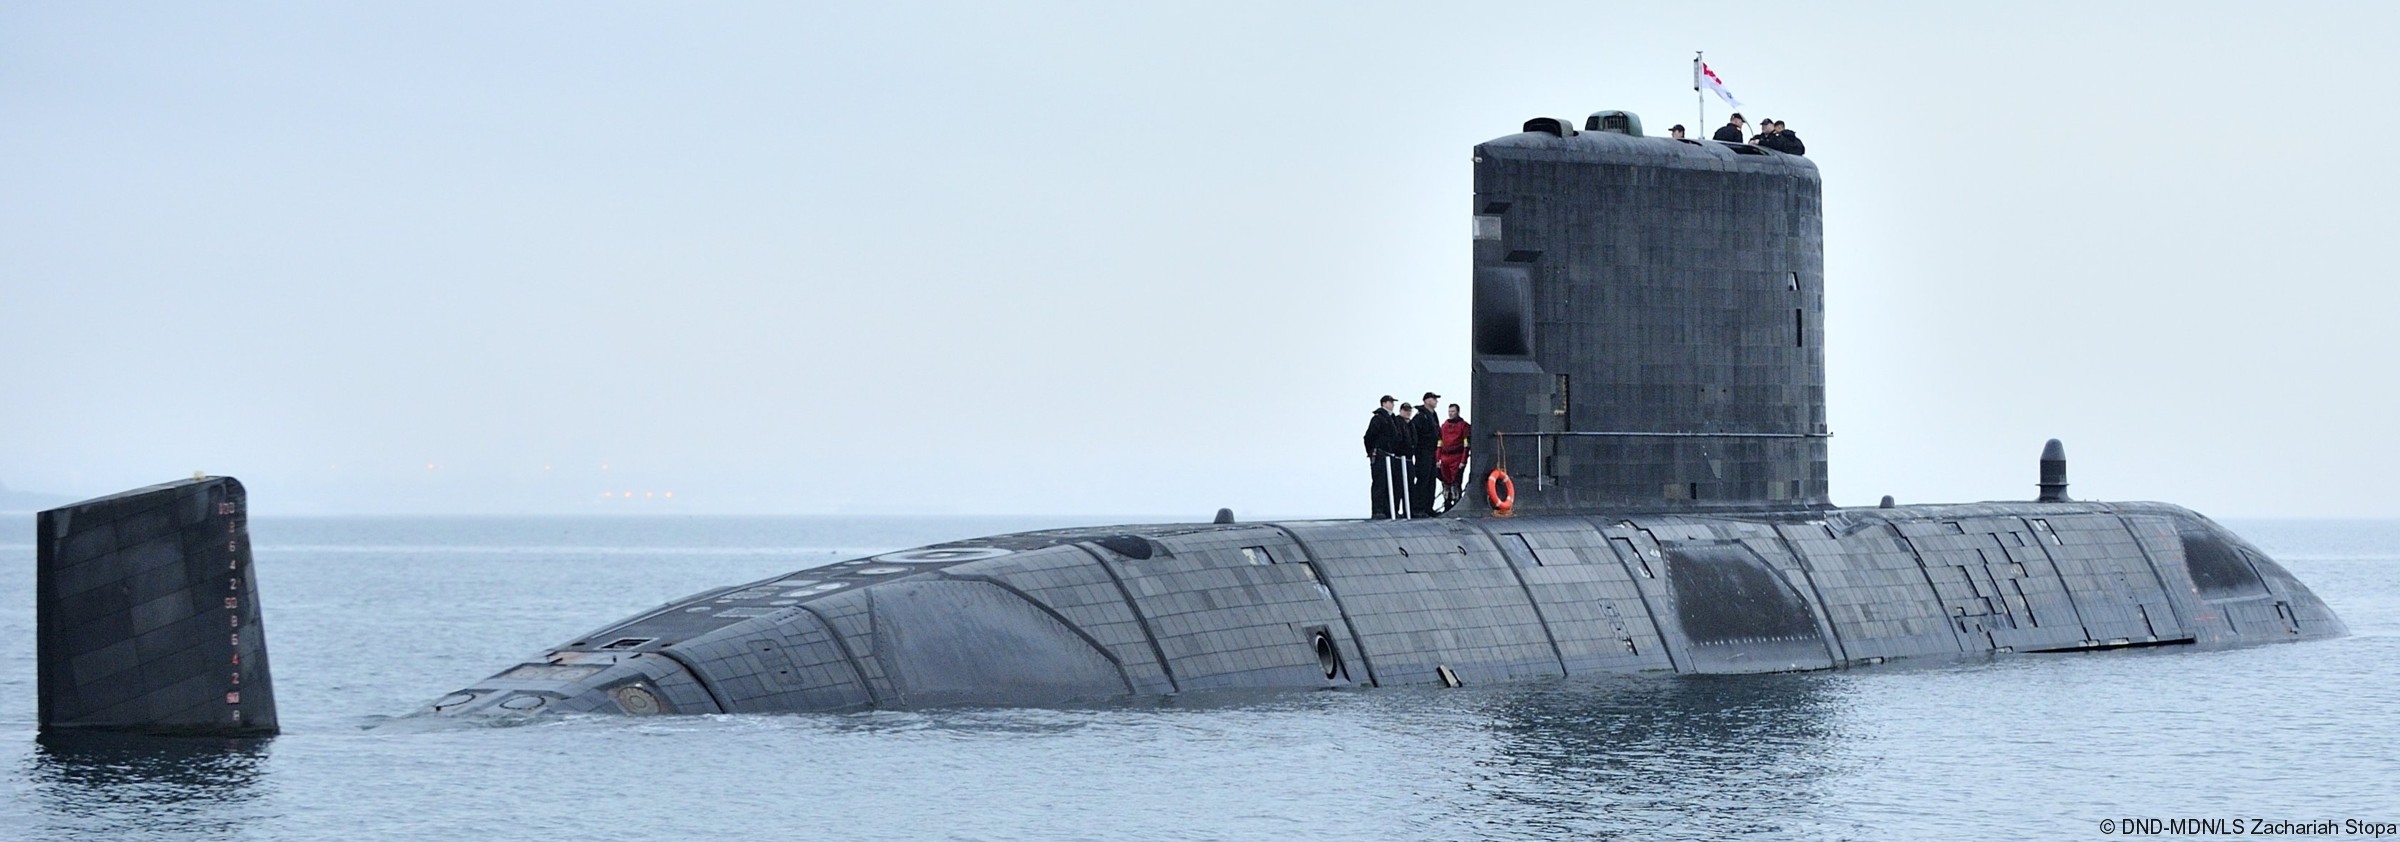 ssk-876 hmcs victoria upholder class attack submarine hunter killer ncsm royal canadian navy 22